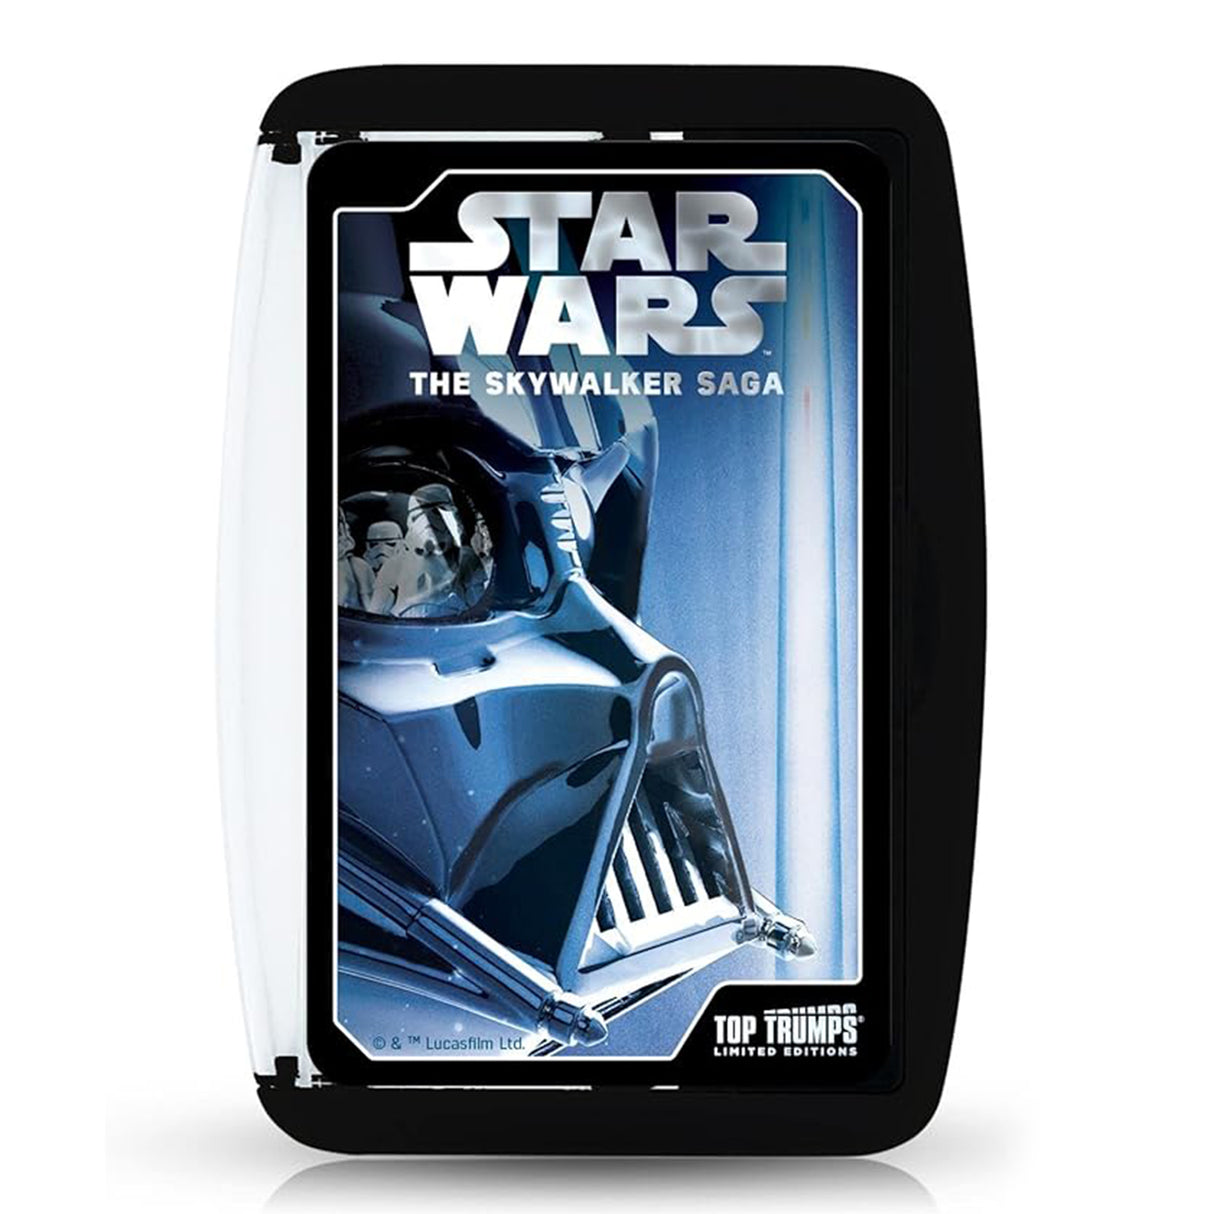 Top Trumps Star Wars Skywalker Saga (Ep 1-9 Ltd Edition) Card Game